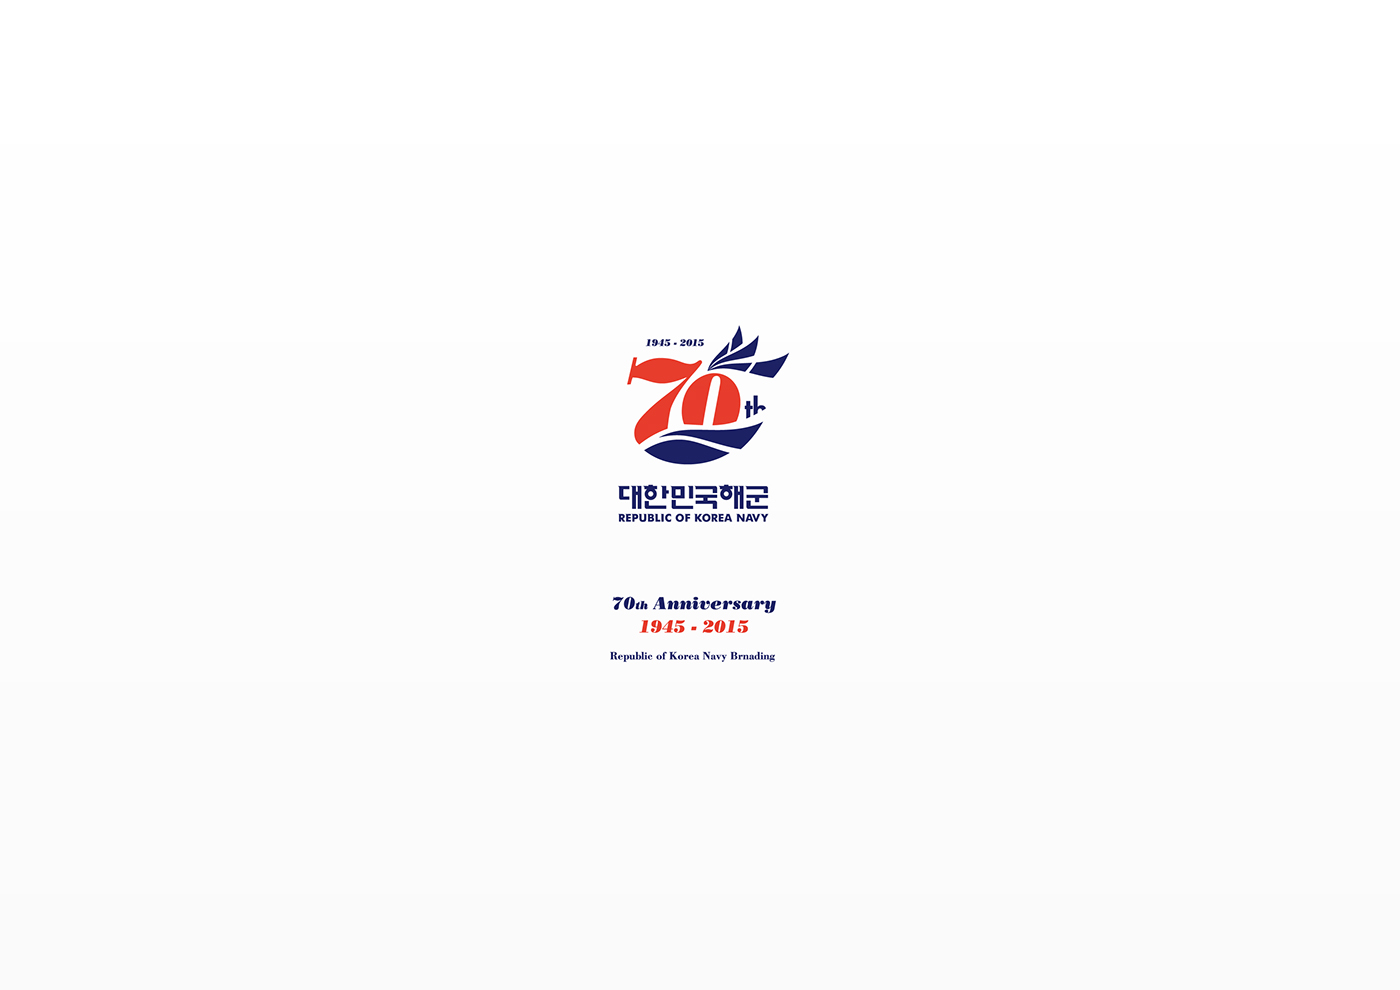 rokn navy repubilc of korea 70th anniversary bodoni logo 70tn anniversary